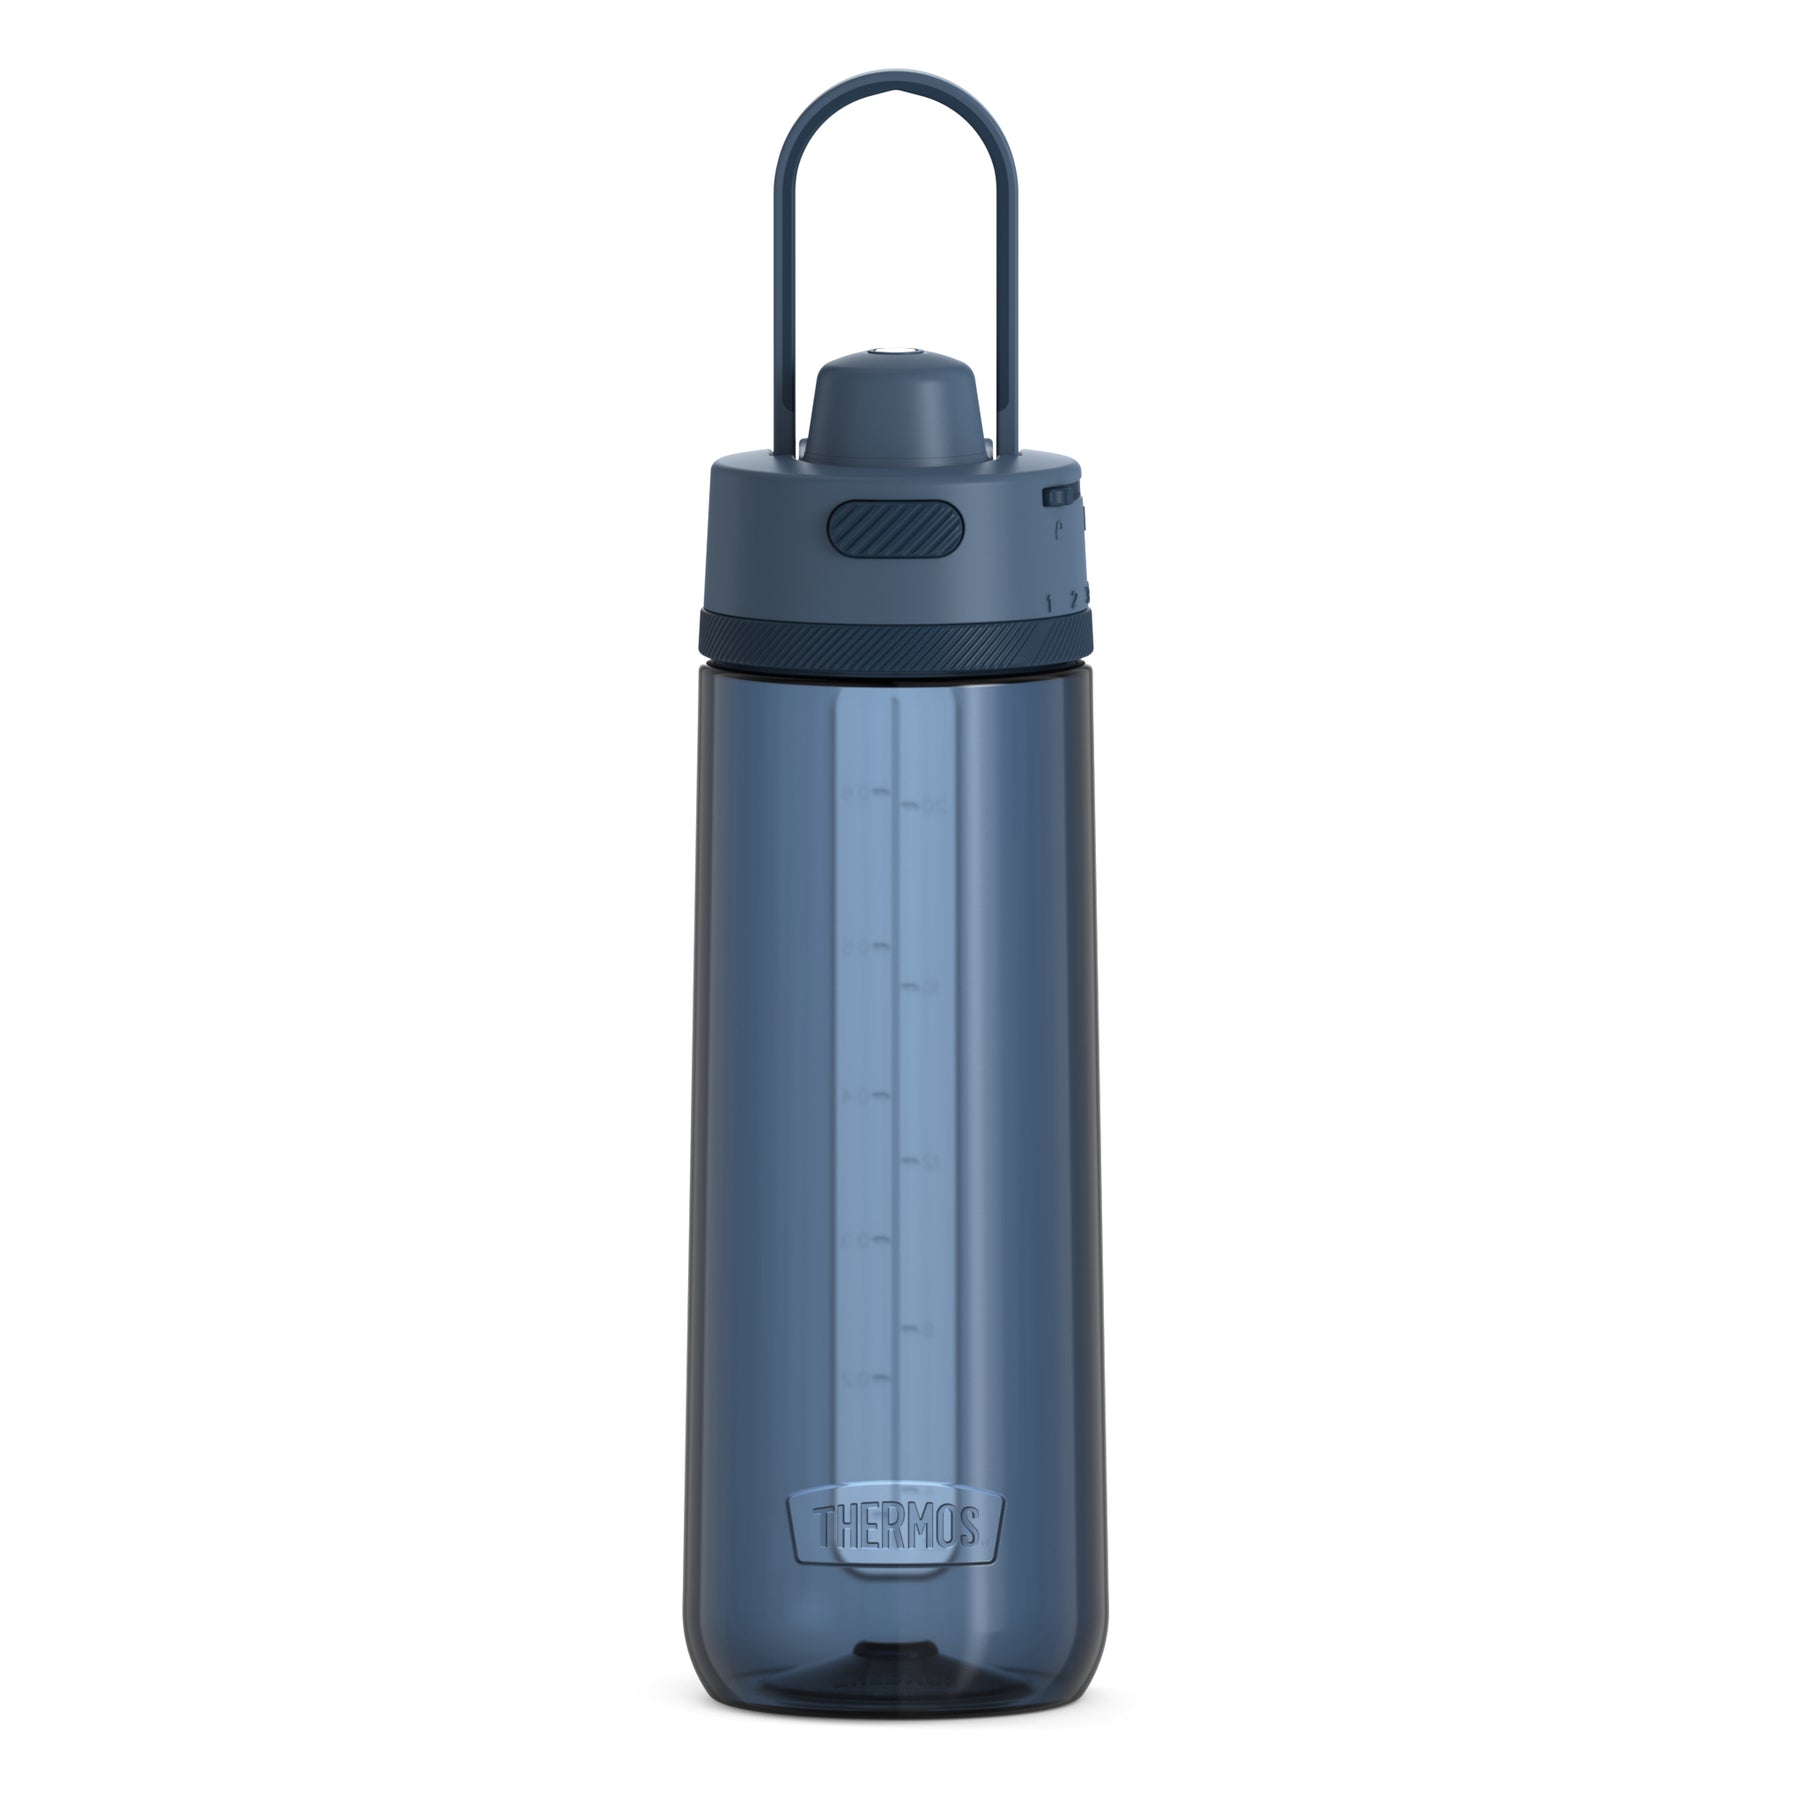 Thermos 24 oz Hard Plastic Hydration Bottle W Spout - White